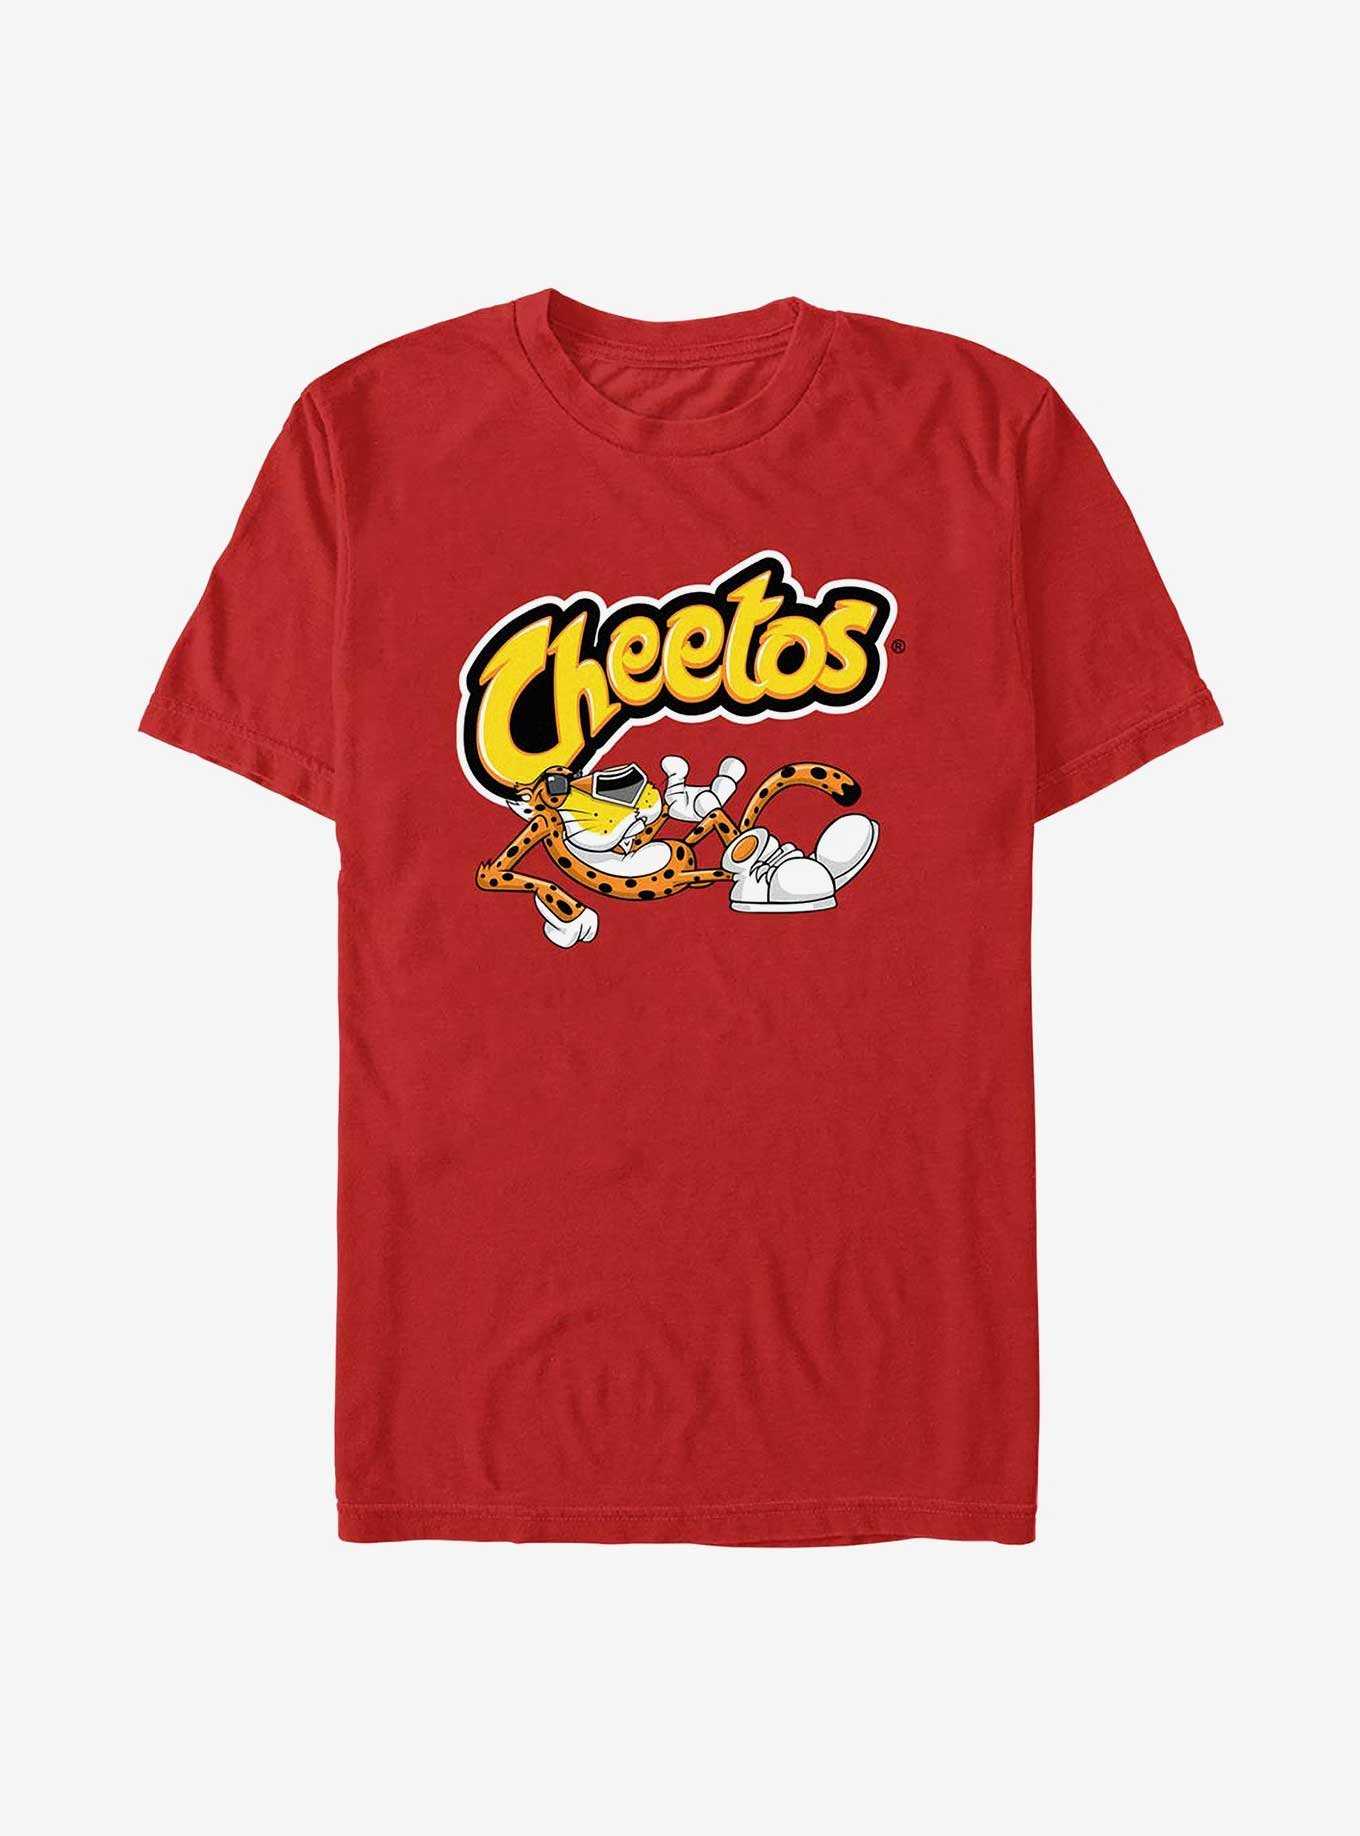 Cheetos Chester Recline T-Shirt, , hi-res